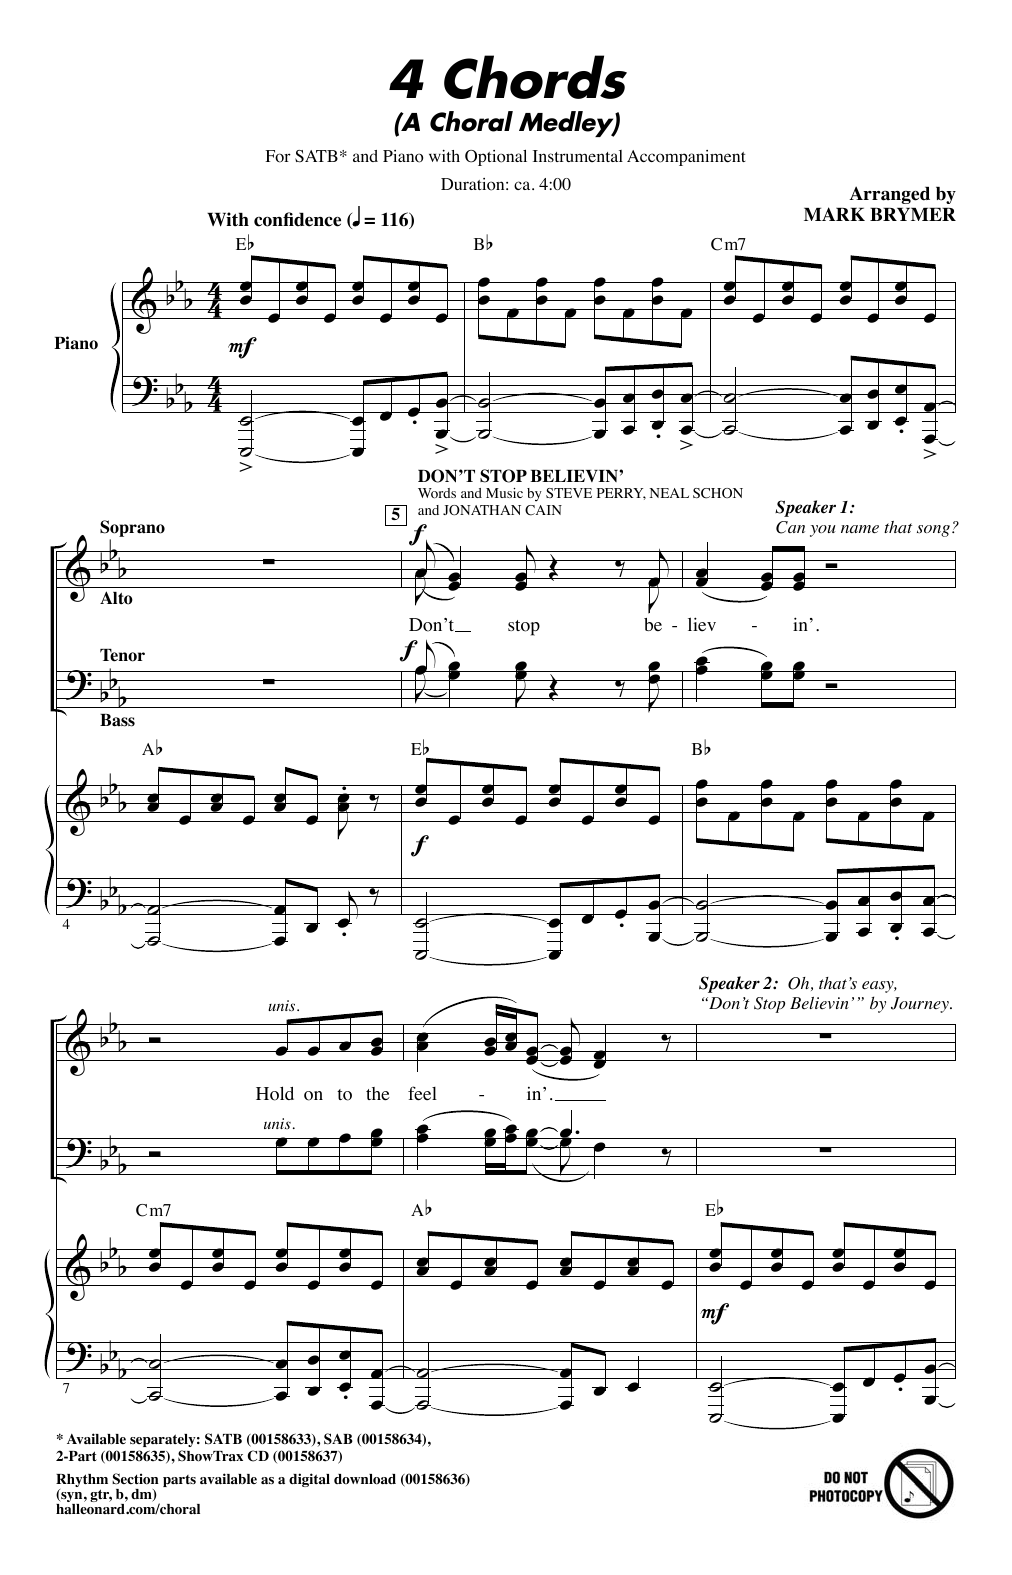 Mark Brymer 4 Chords (A Choral Medley) Sheet Music Notes & Chords for SAB - Download or Print PDF